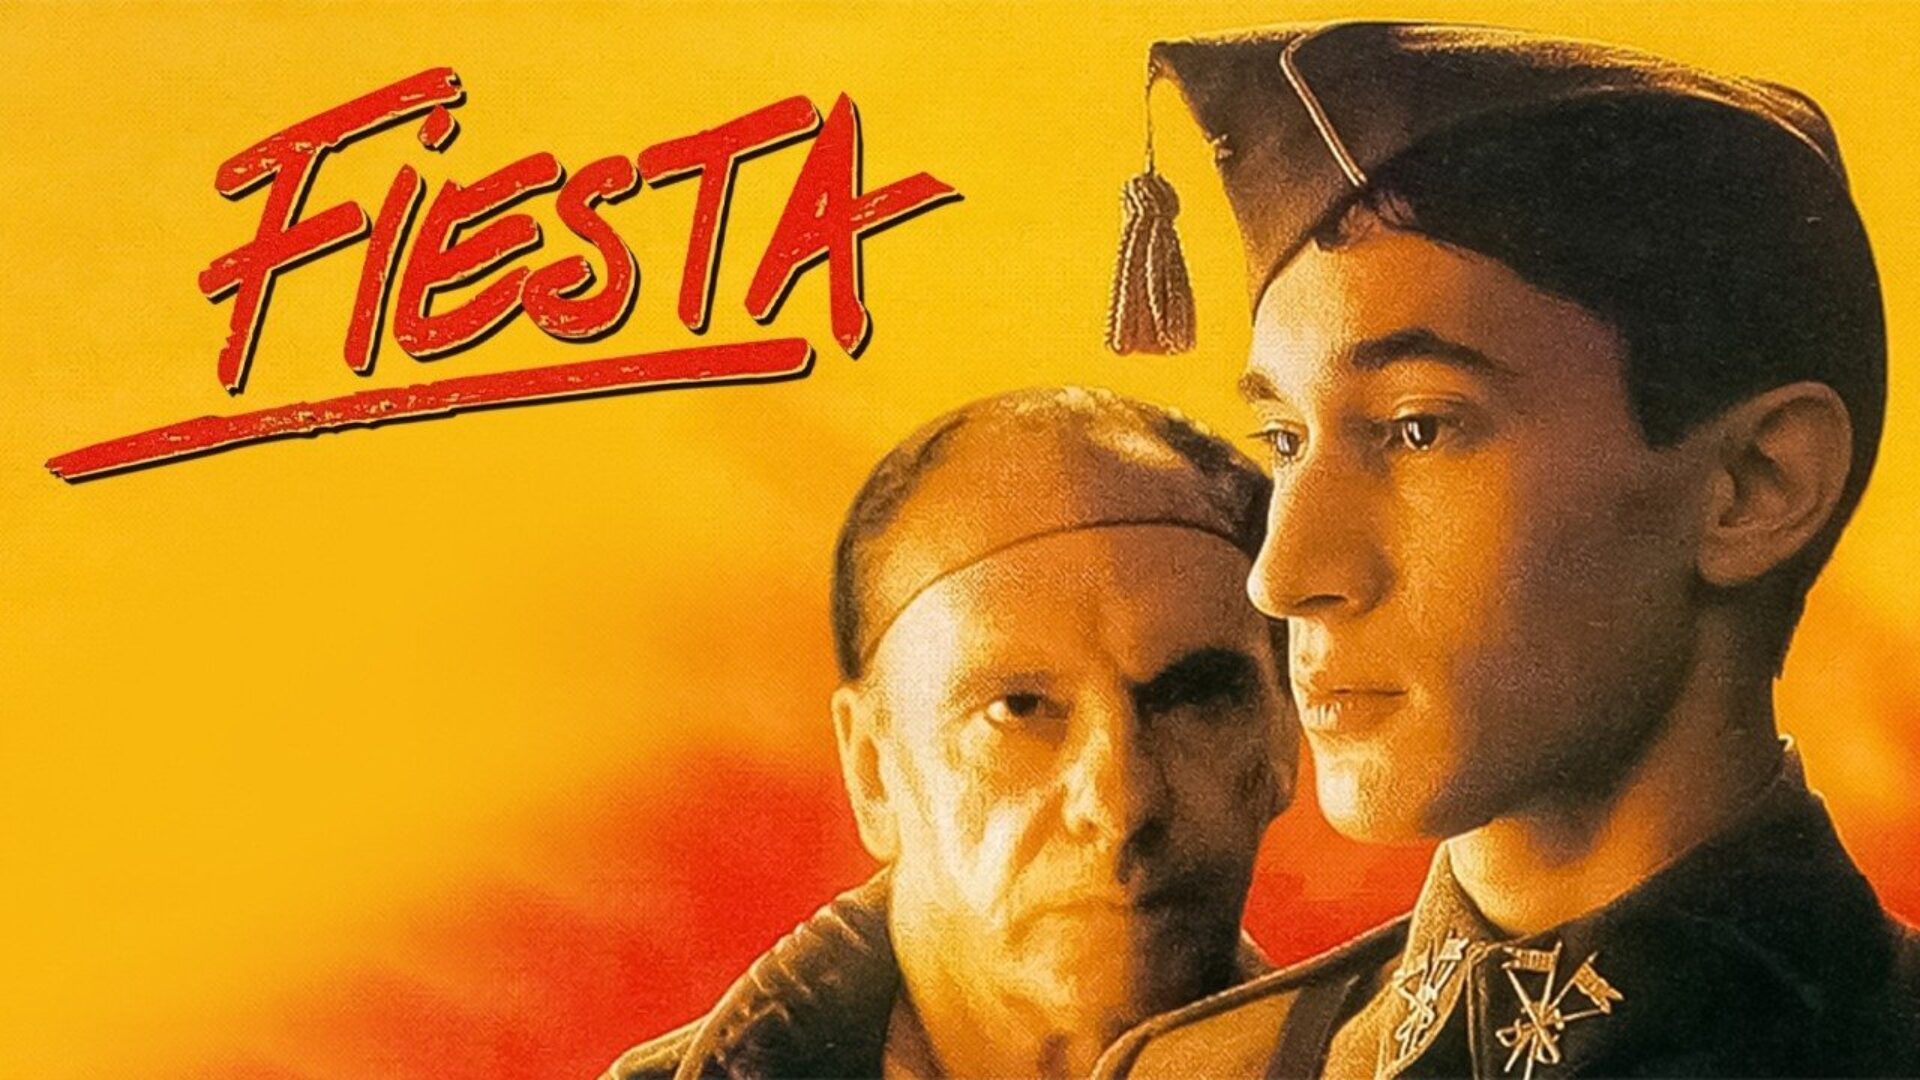 Fiesta 1